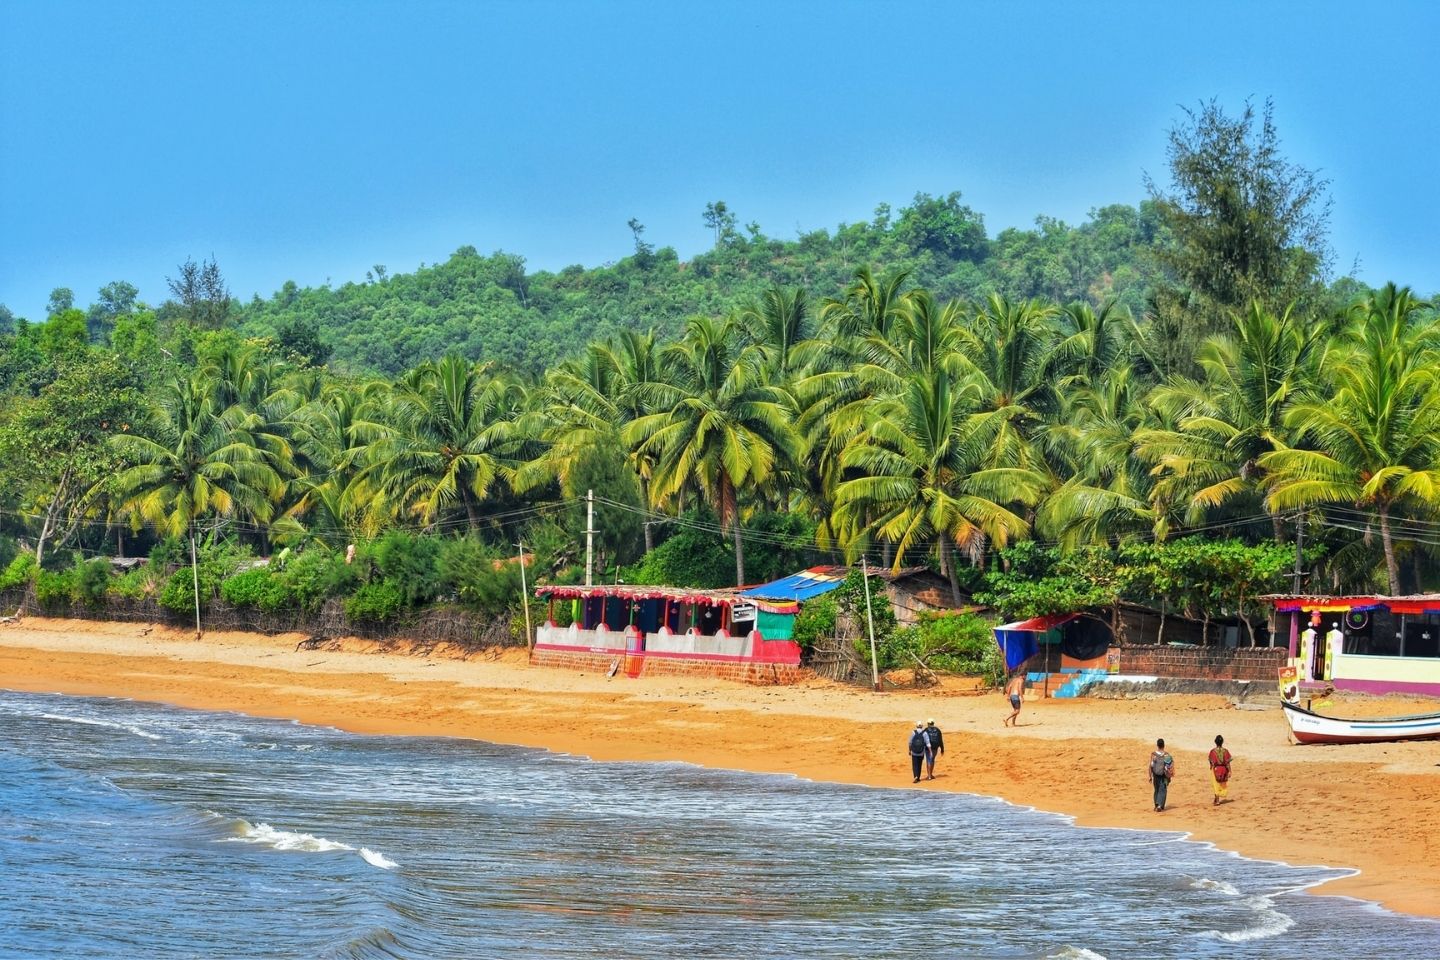 Gokarna Beach 657 km from Hyderabad